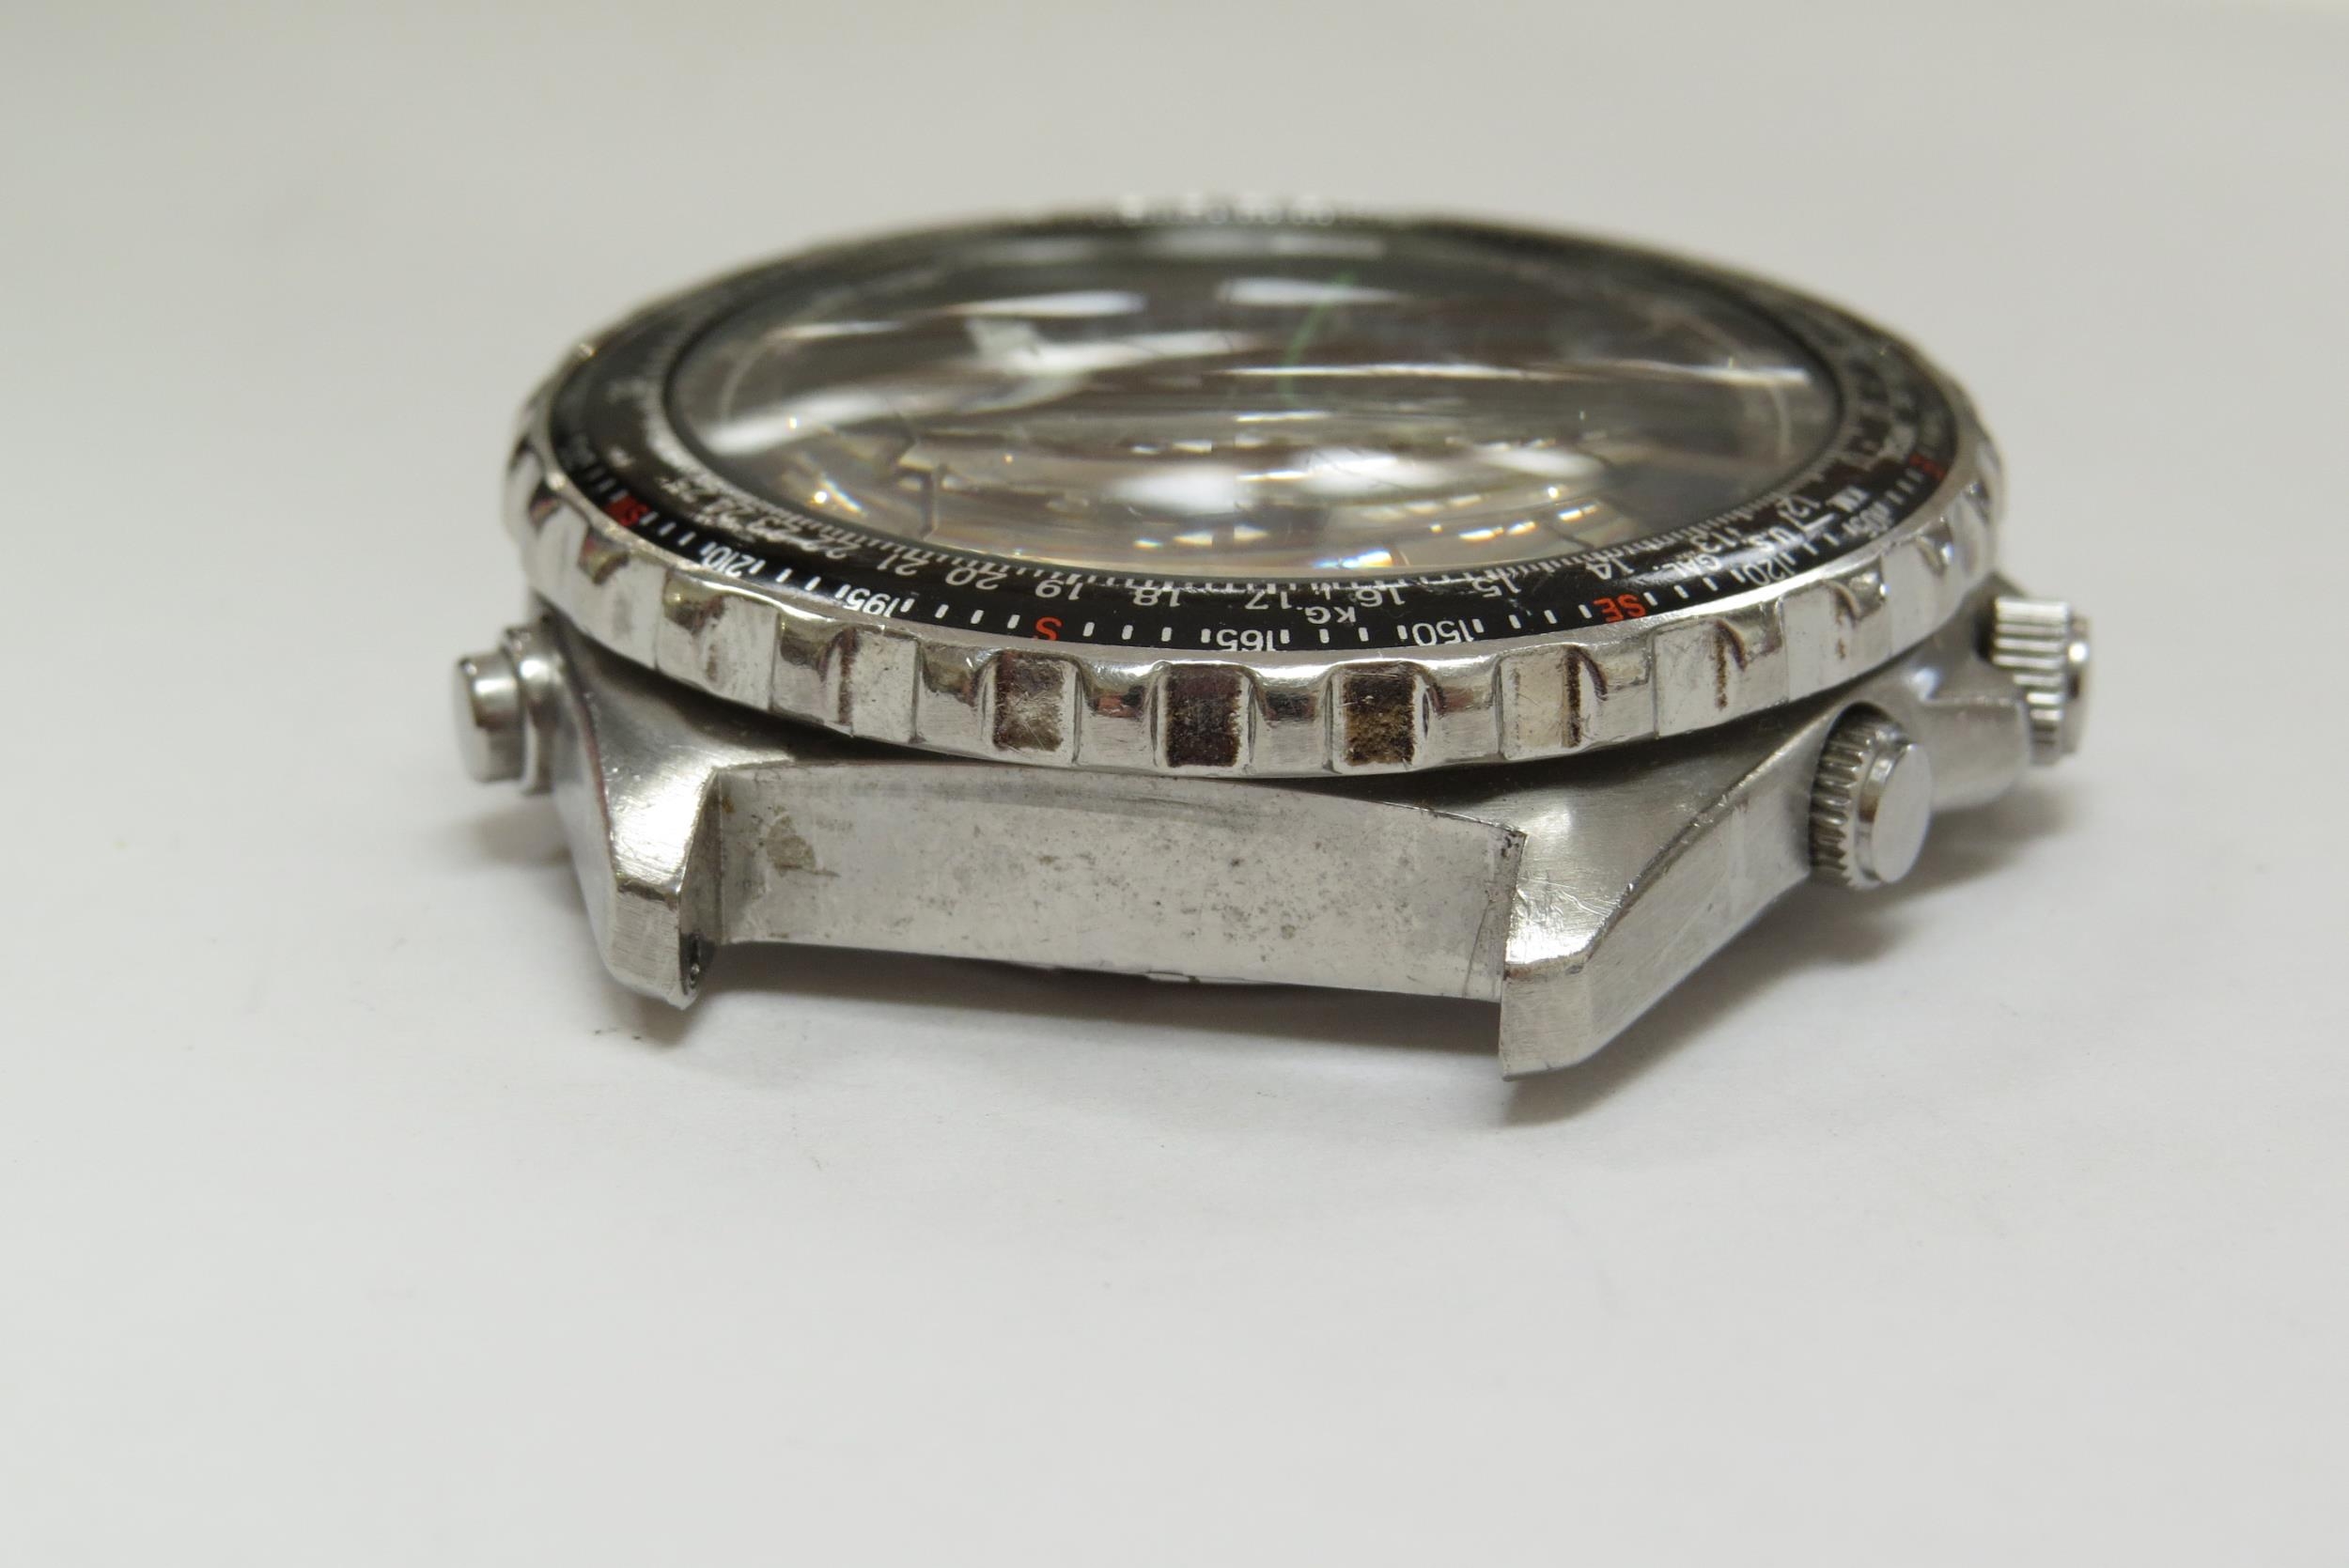 A Seiko Sports chronograph wristwatch, no strap - Image 6 of 7